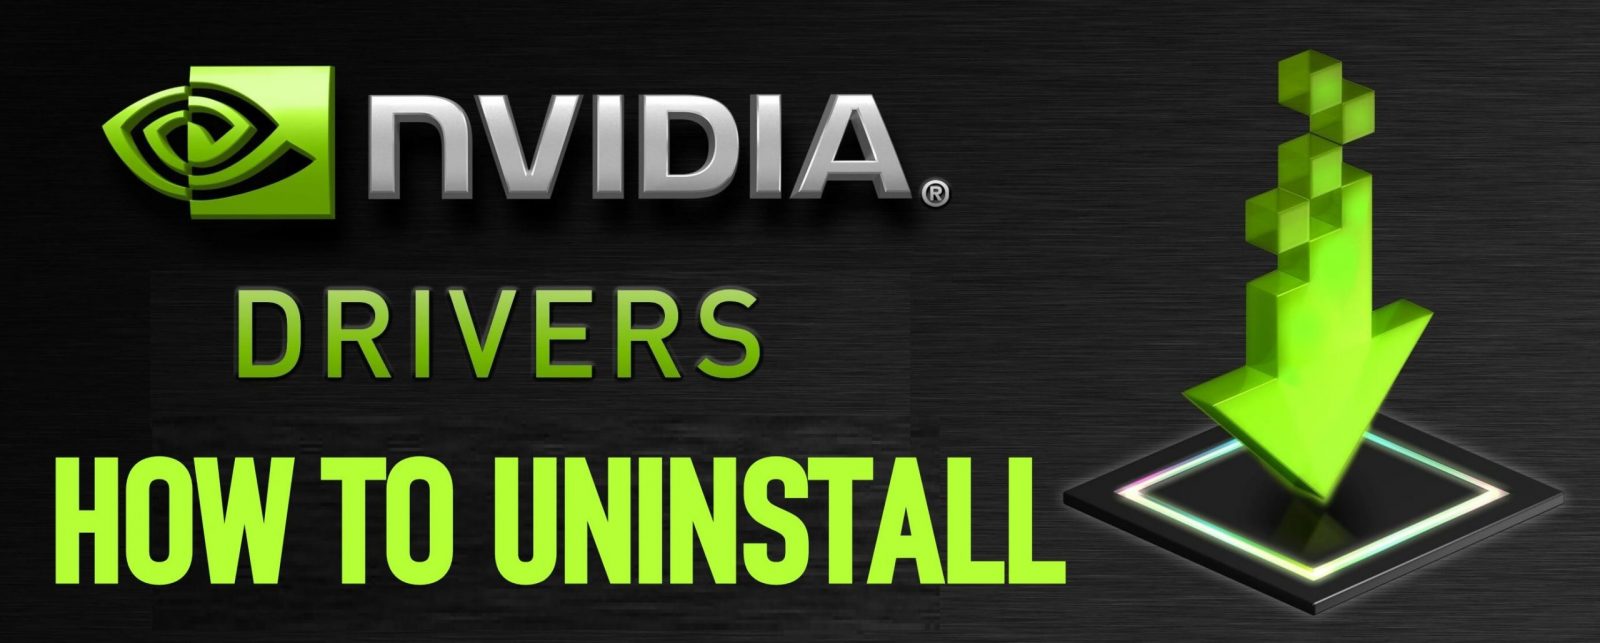 uninstall nvidia drivers for new gpu